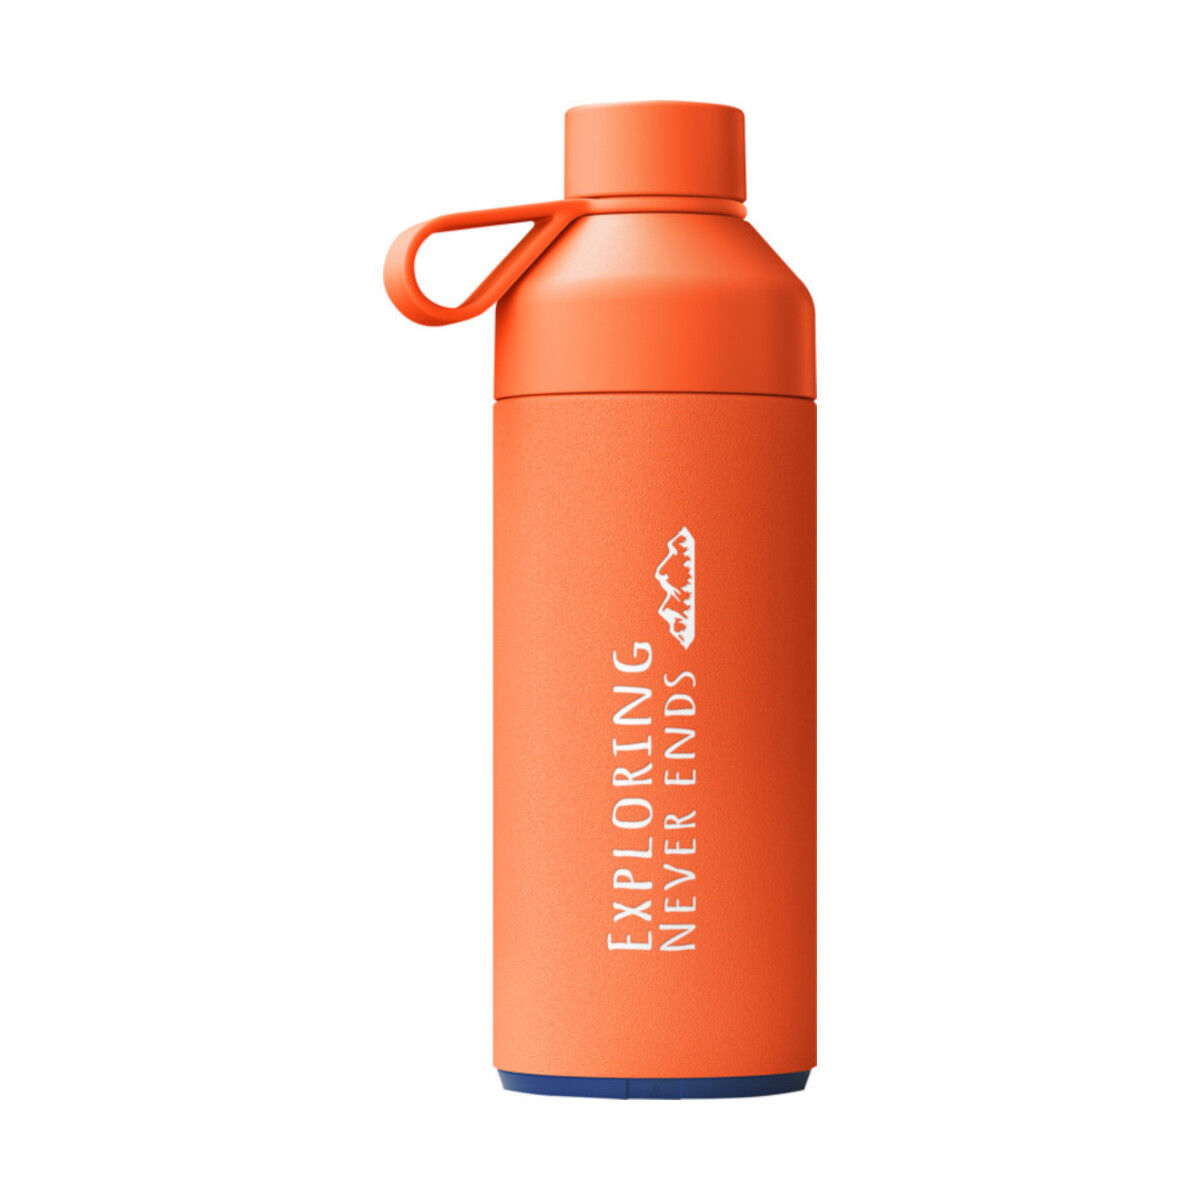 Big Ocean Bottle (orange with sample branding)